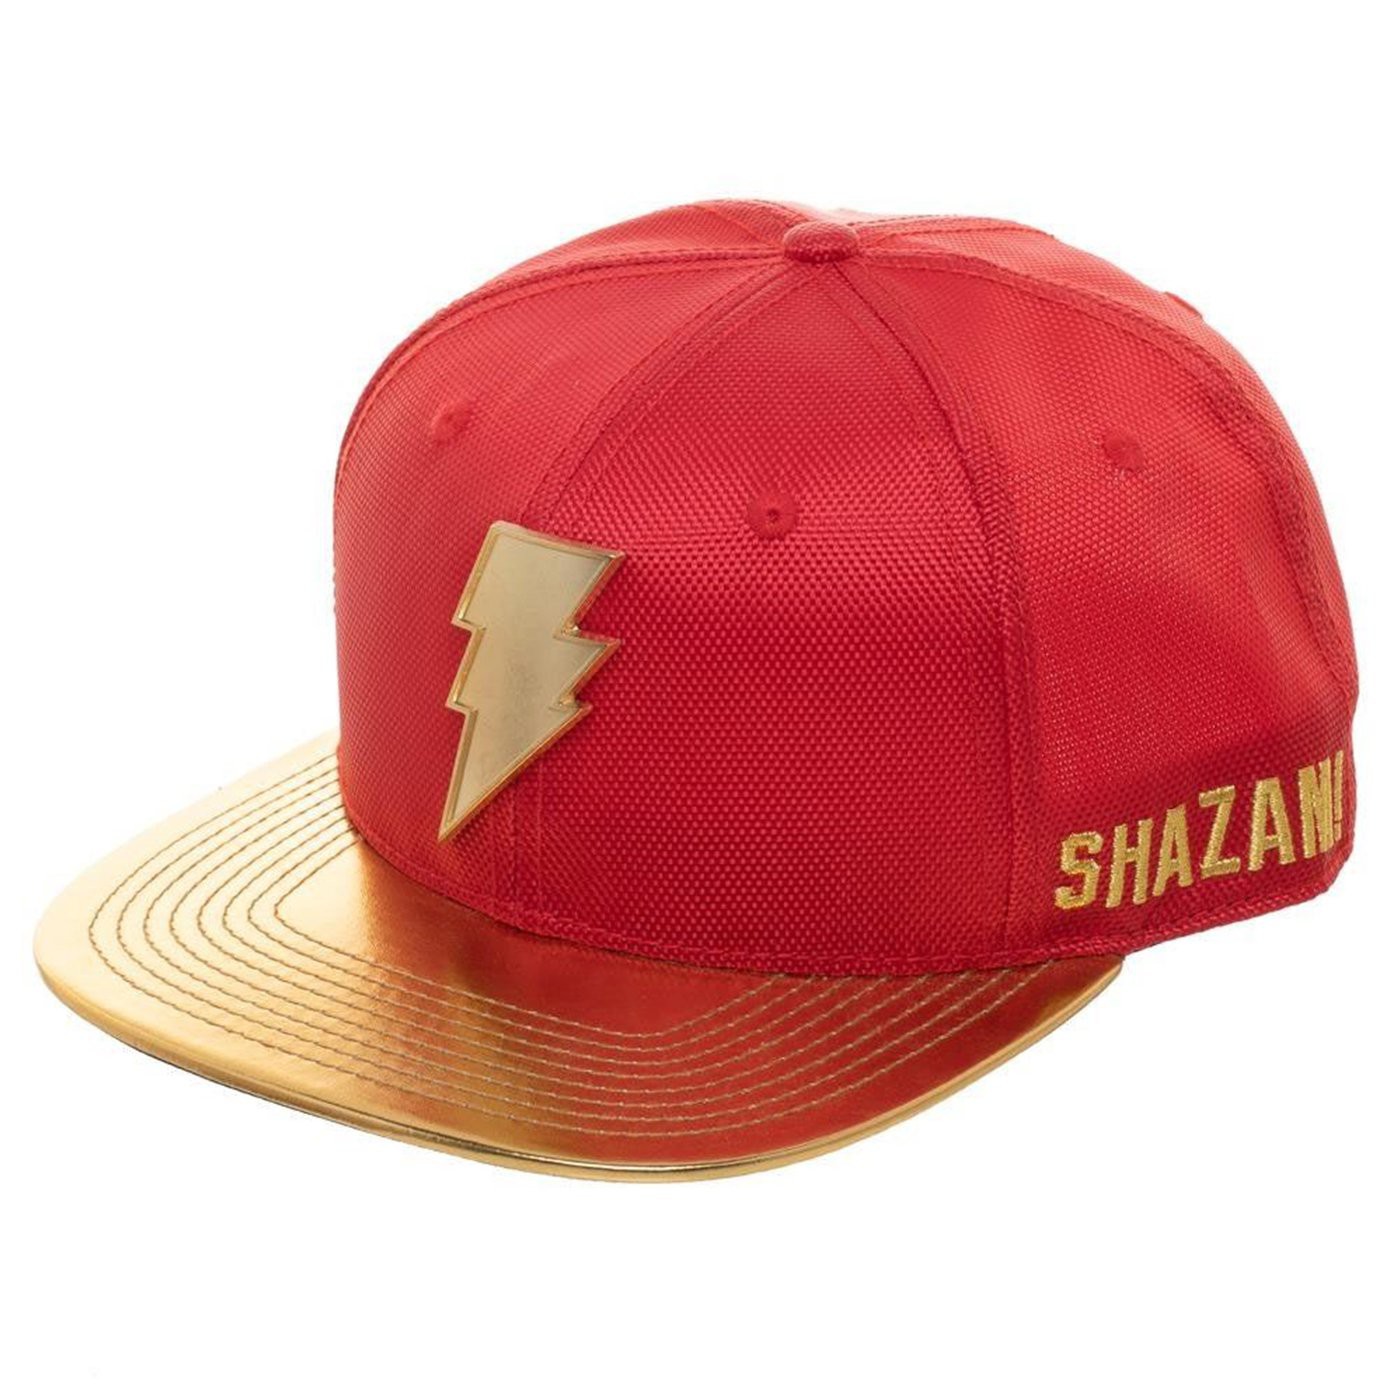 Shazam Movie Logo Yellow Brim Hat